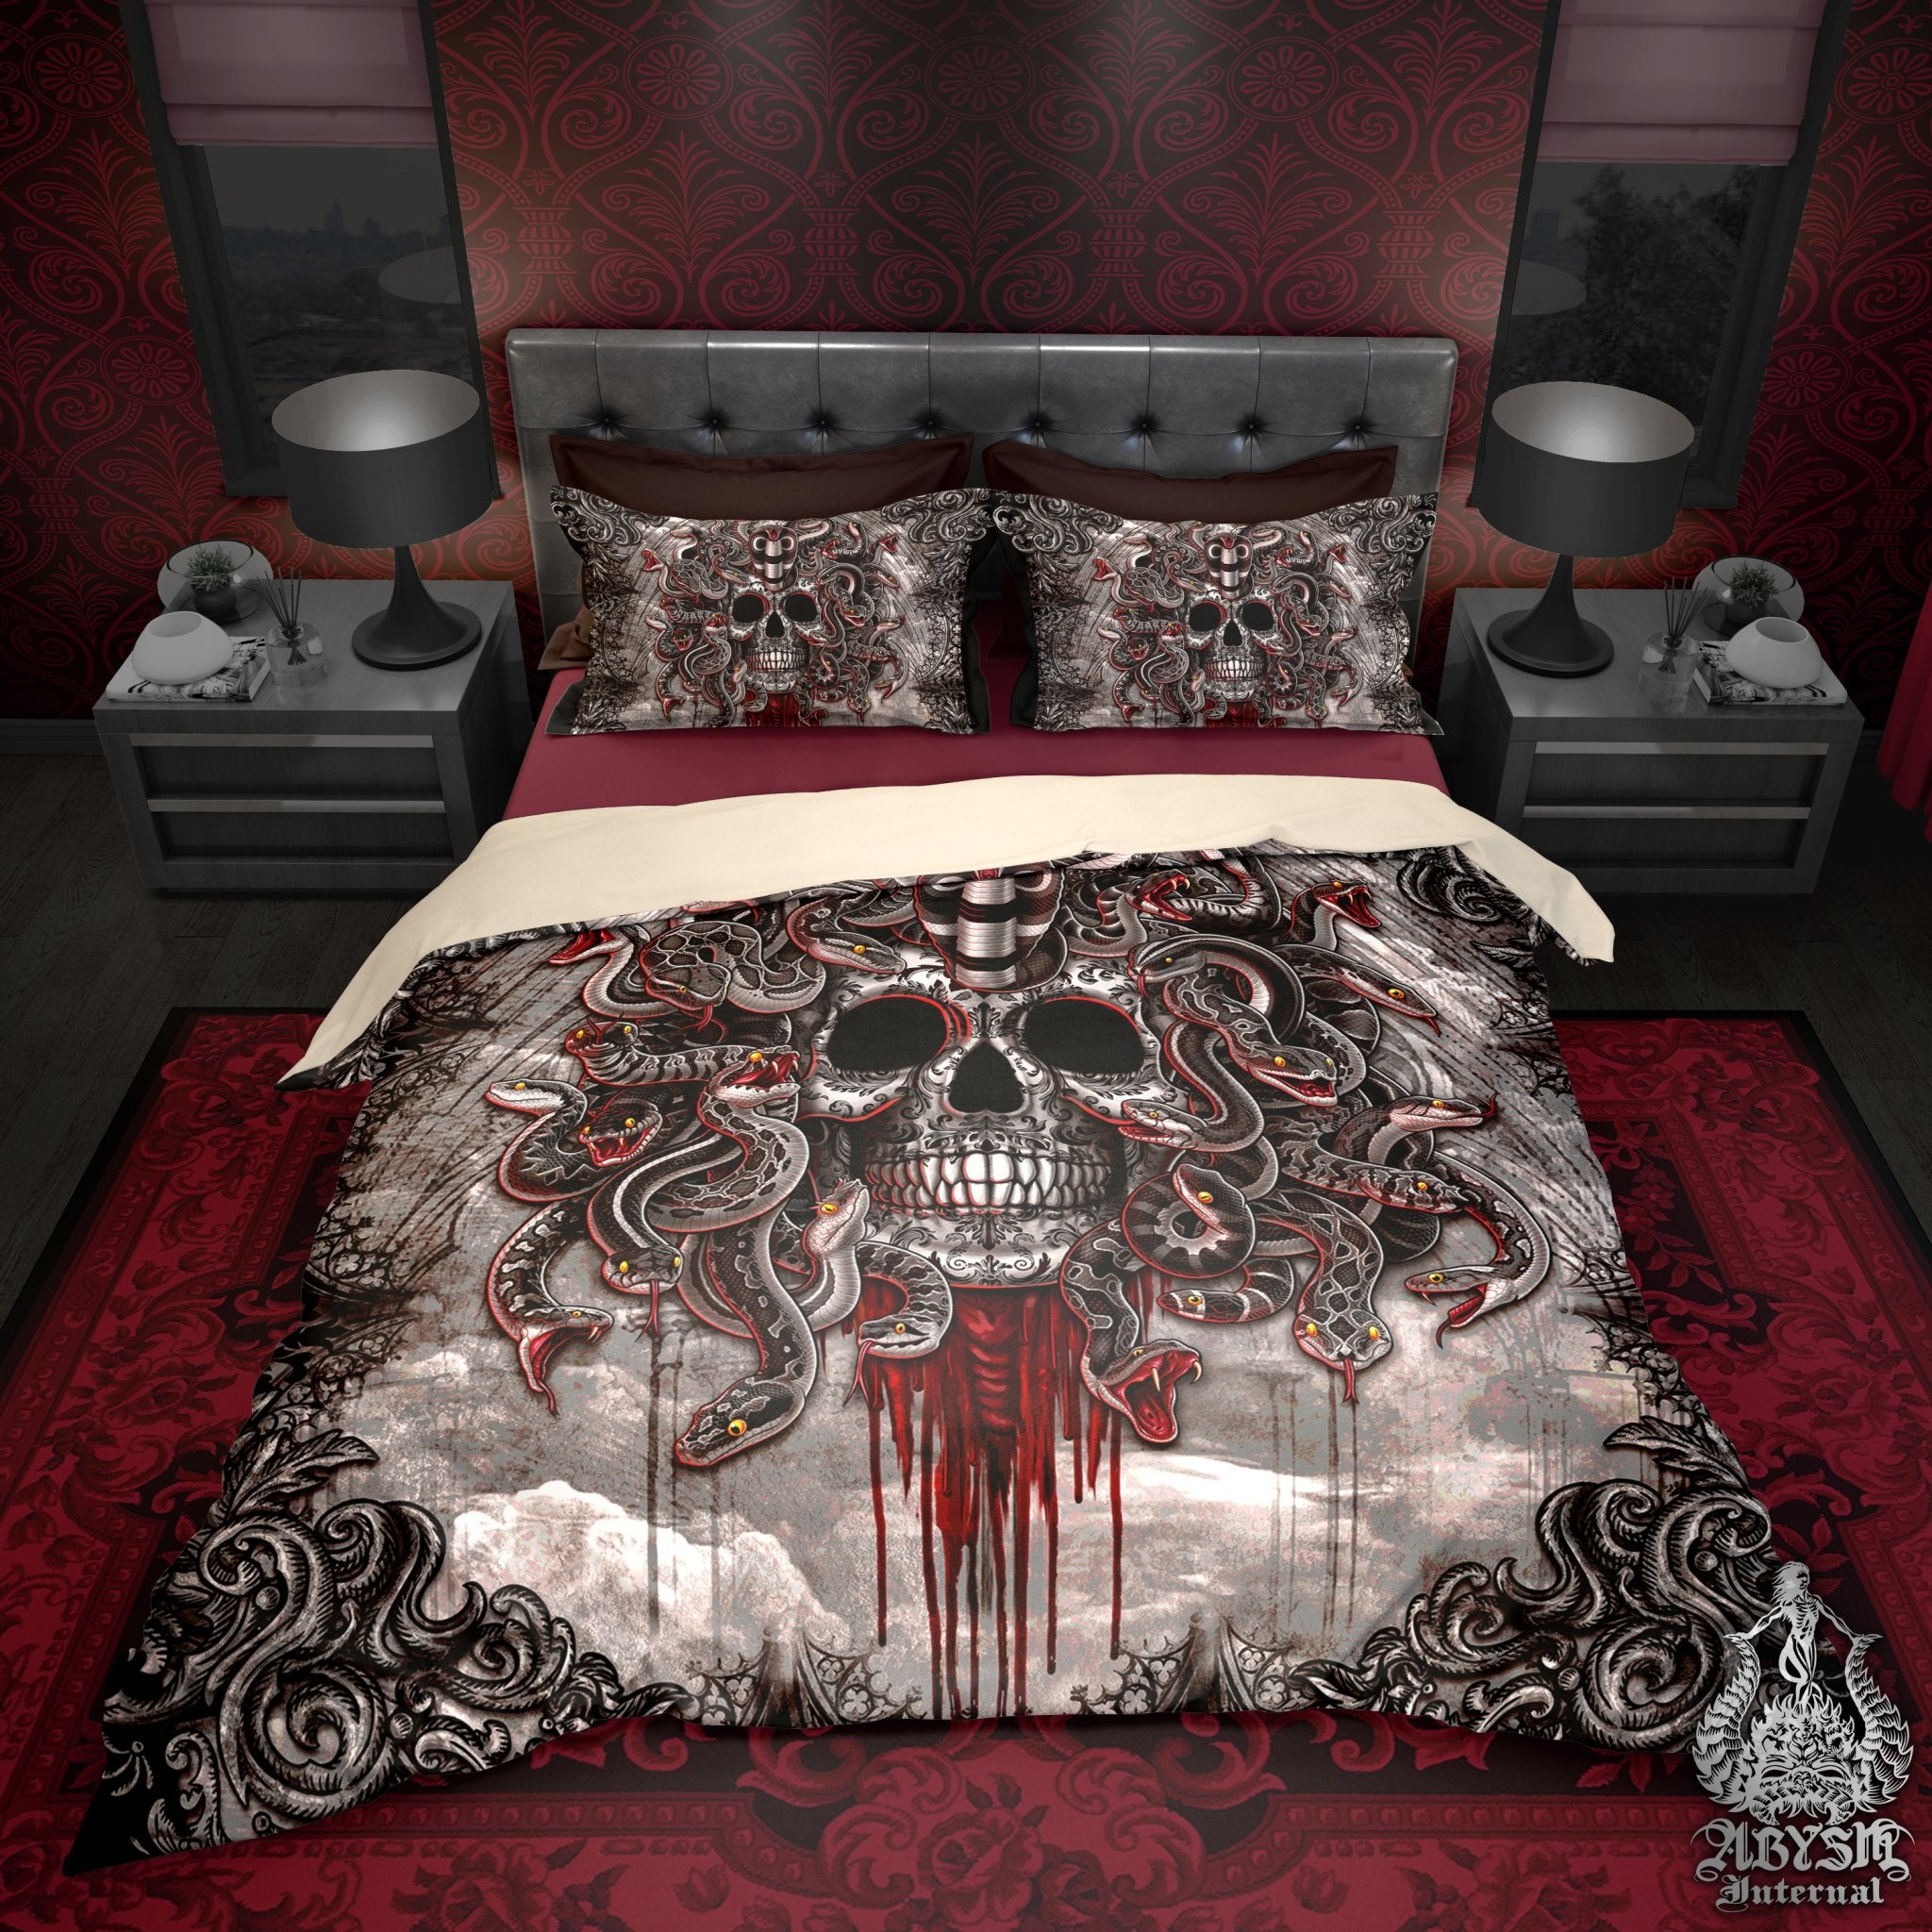 Gothic Bed Cover, Duvet or Comforter, Horror Medusa, Goth Bedding Set, Skull Bedroom Decor, King, Queen & Twin Size - 4 Faces, Grey - Abysm Internal